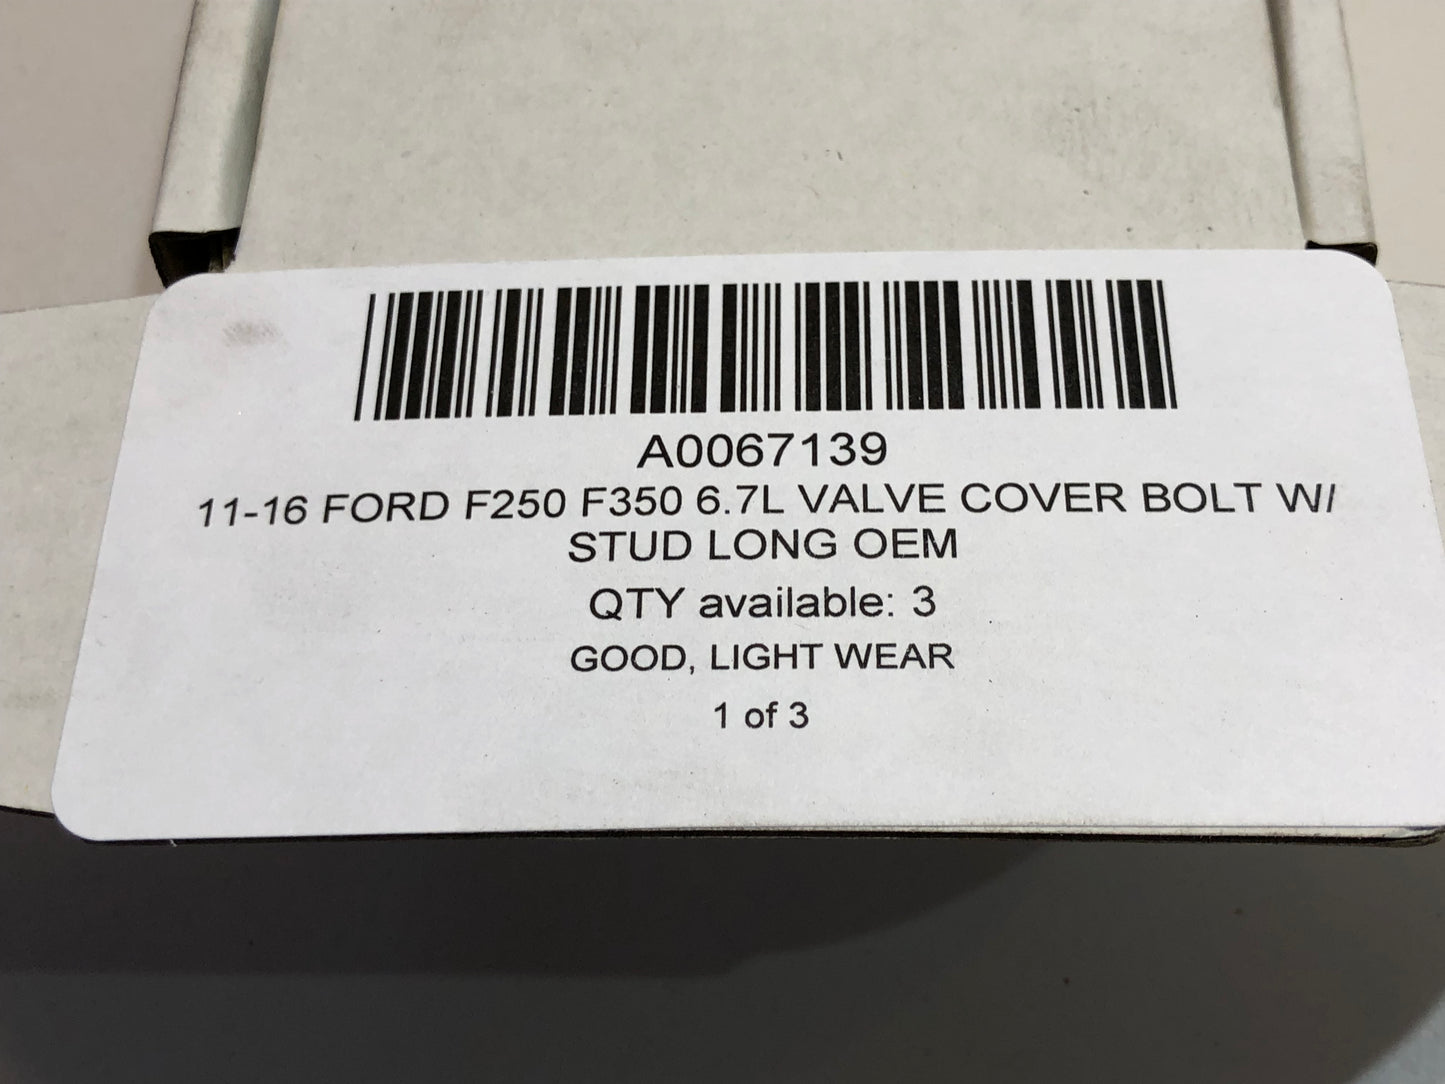 11-16 Ford F250 F350 6.7L Valve Cover Bolt W/ Stud Long OEM